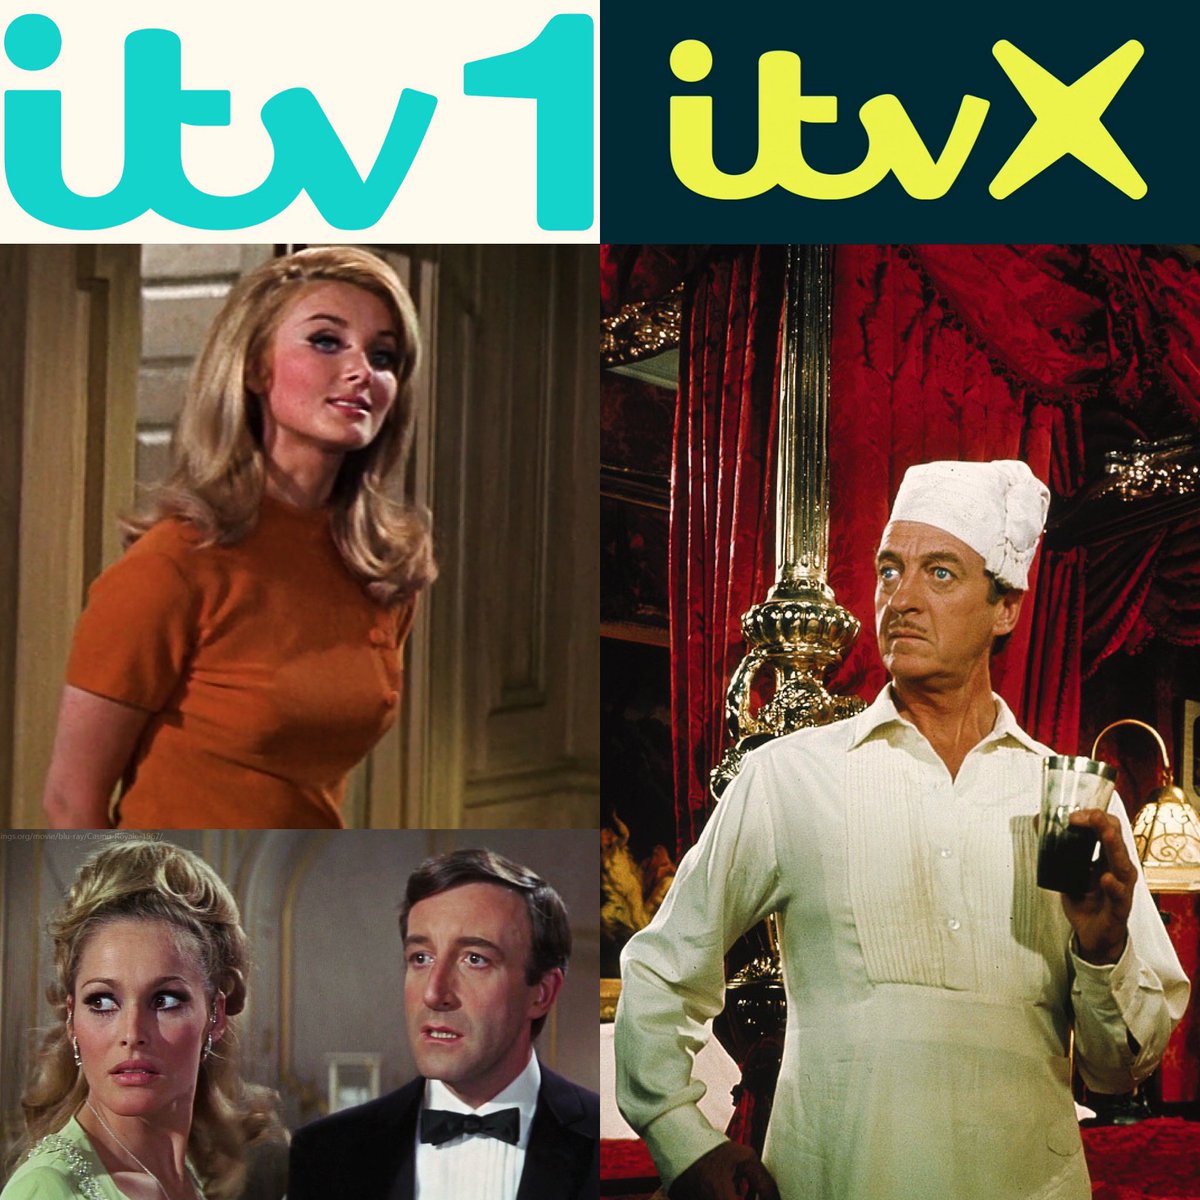 Breakfast Bond!

#CasinoRoyale ITV1 7am

Plus it’s free to stream now on ITVX…